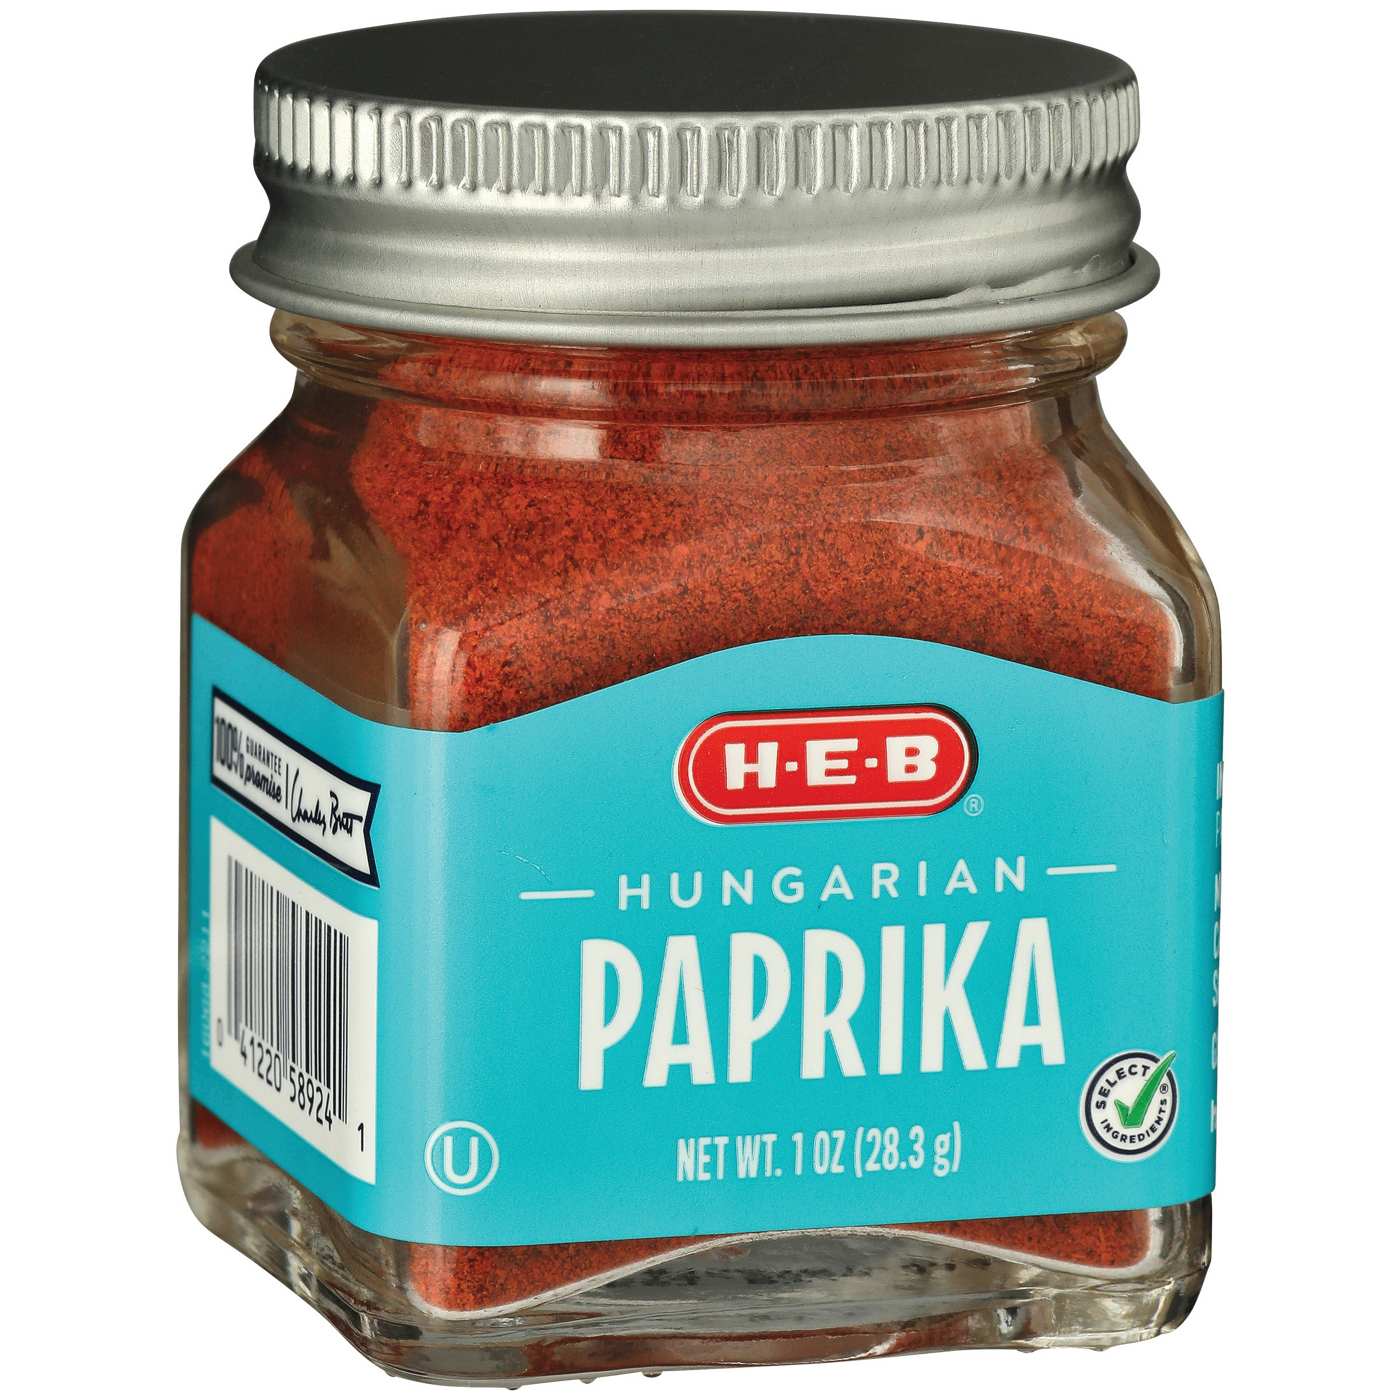 H-E-B Hungarian Paprika; image 2 of 2